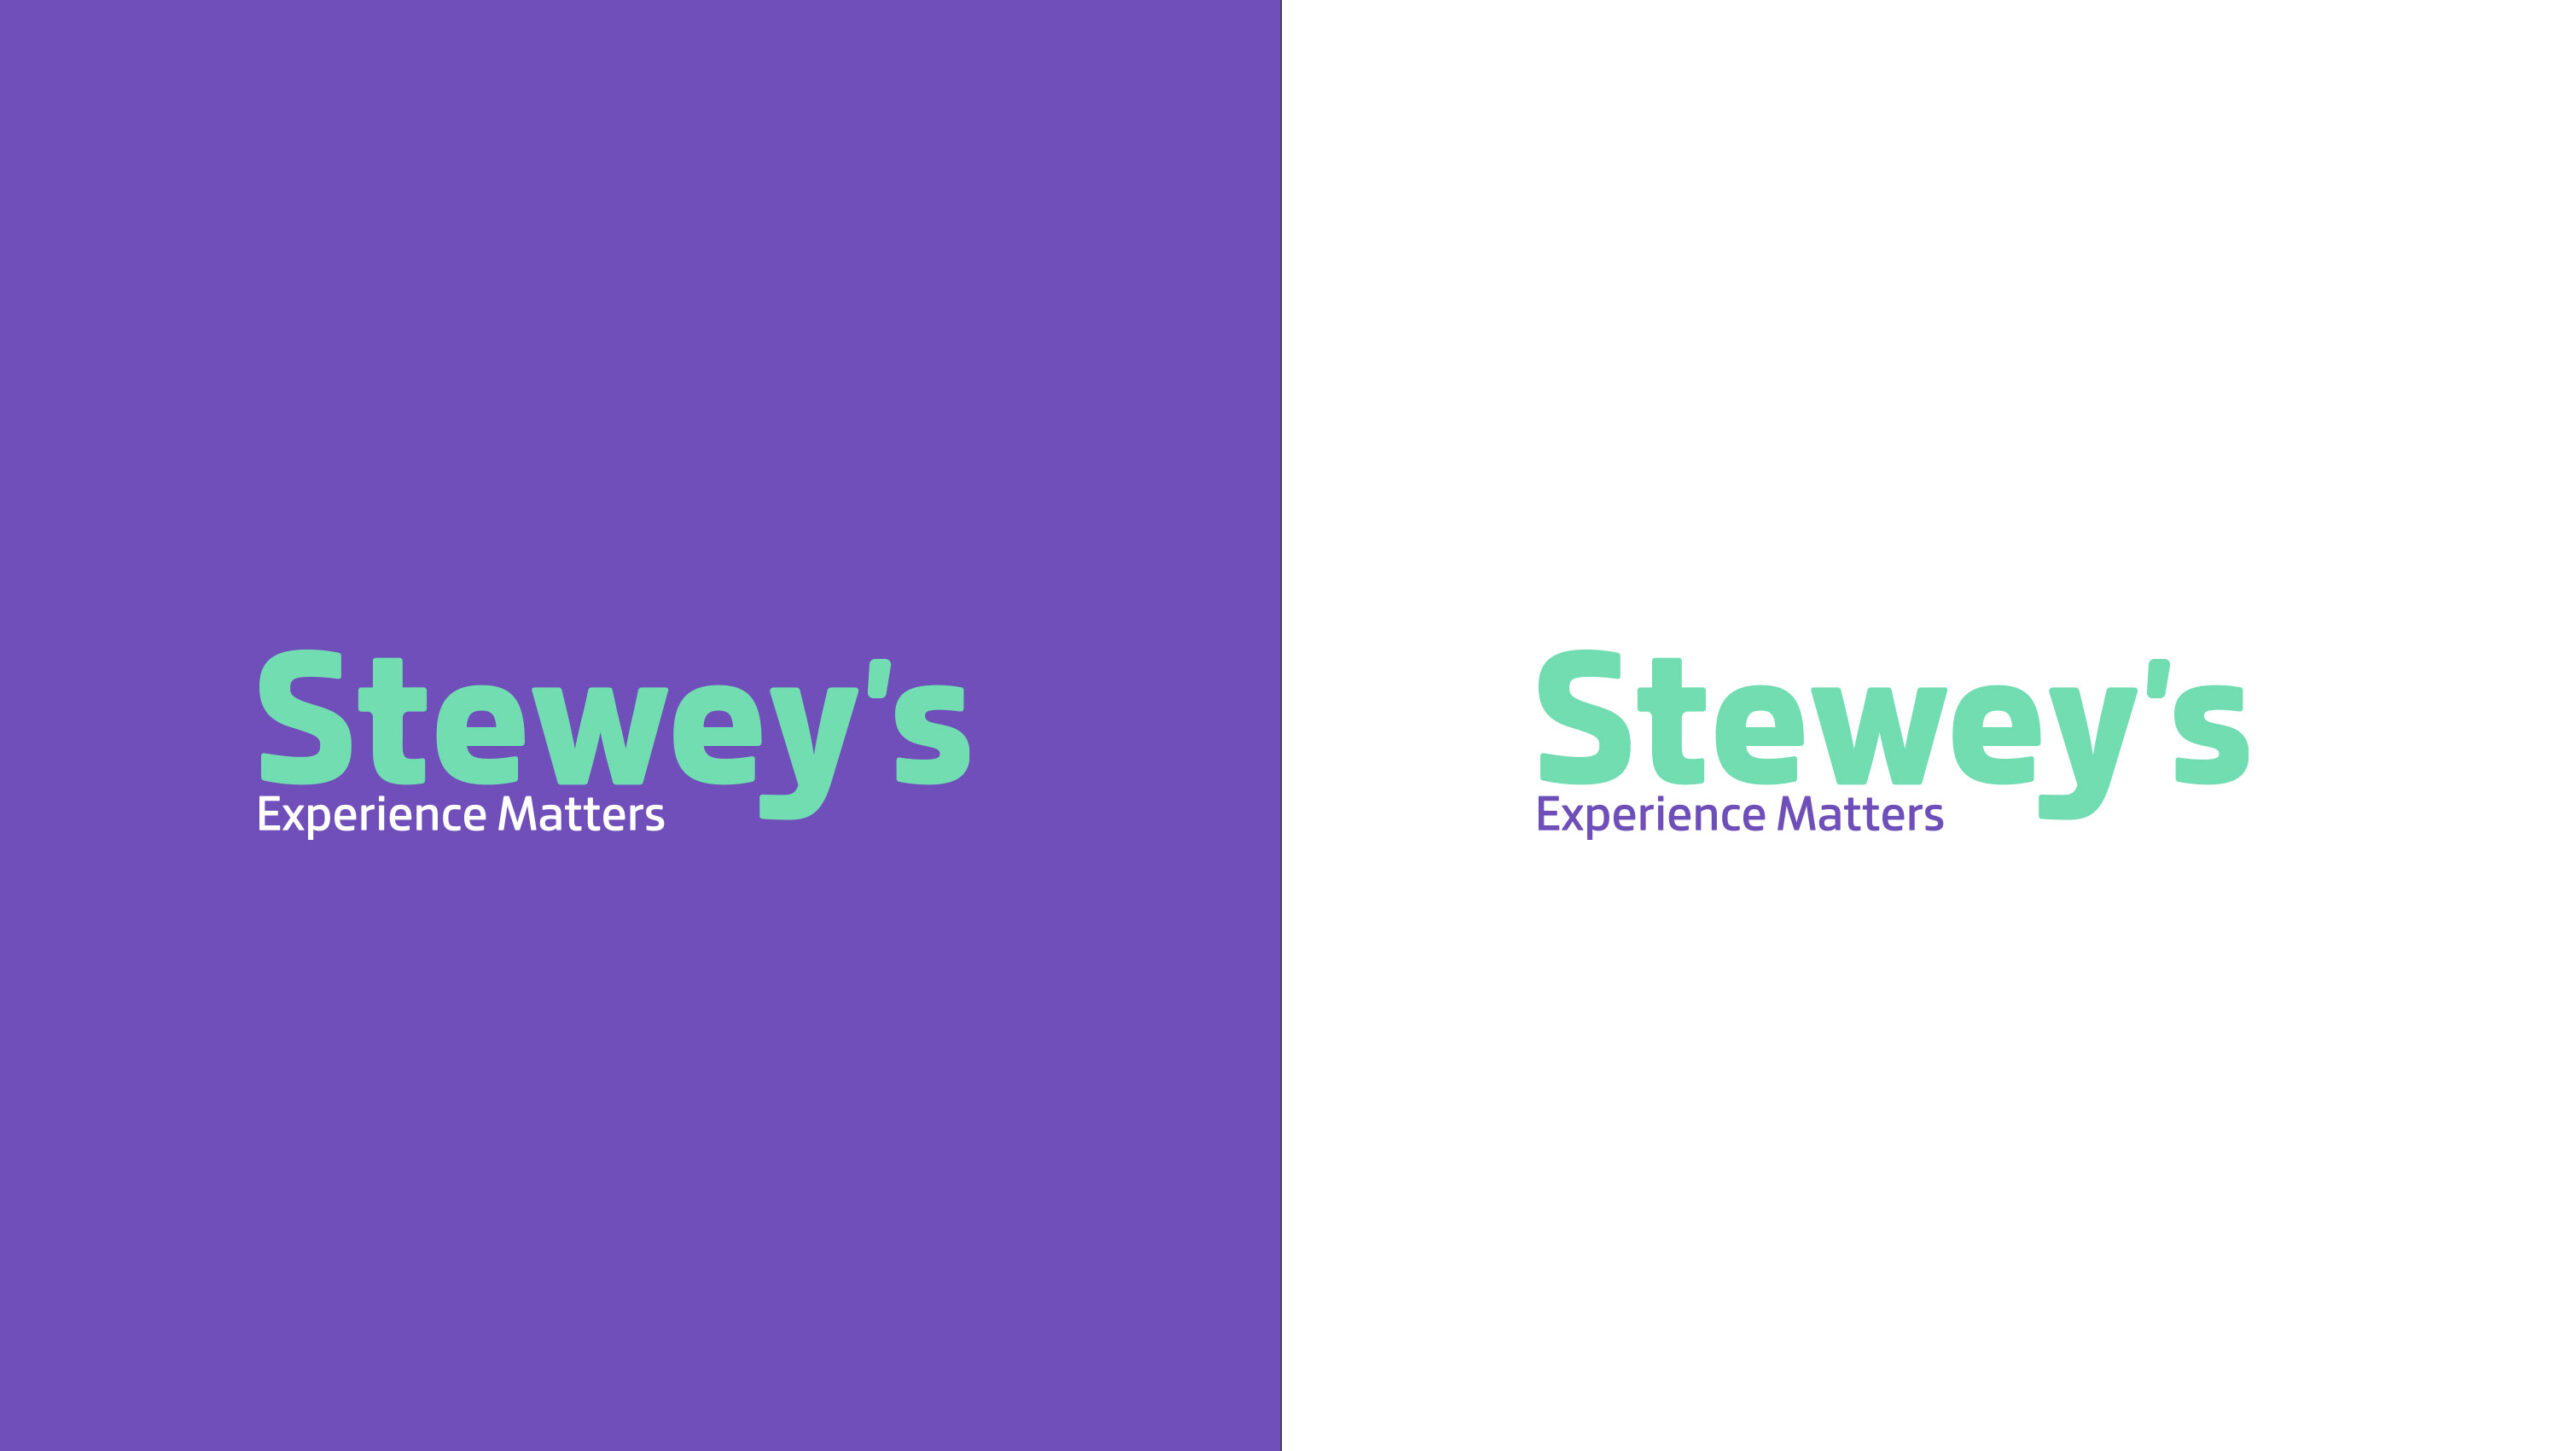 steweys_img1